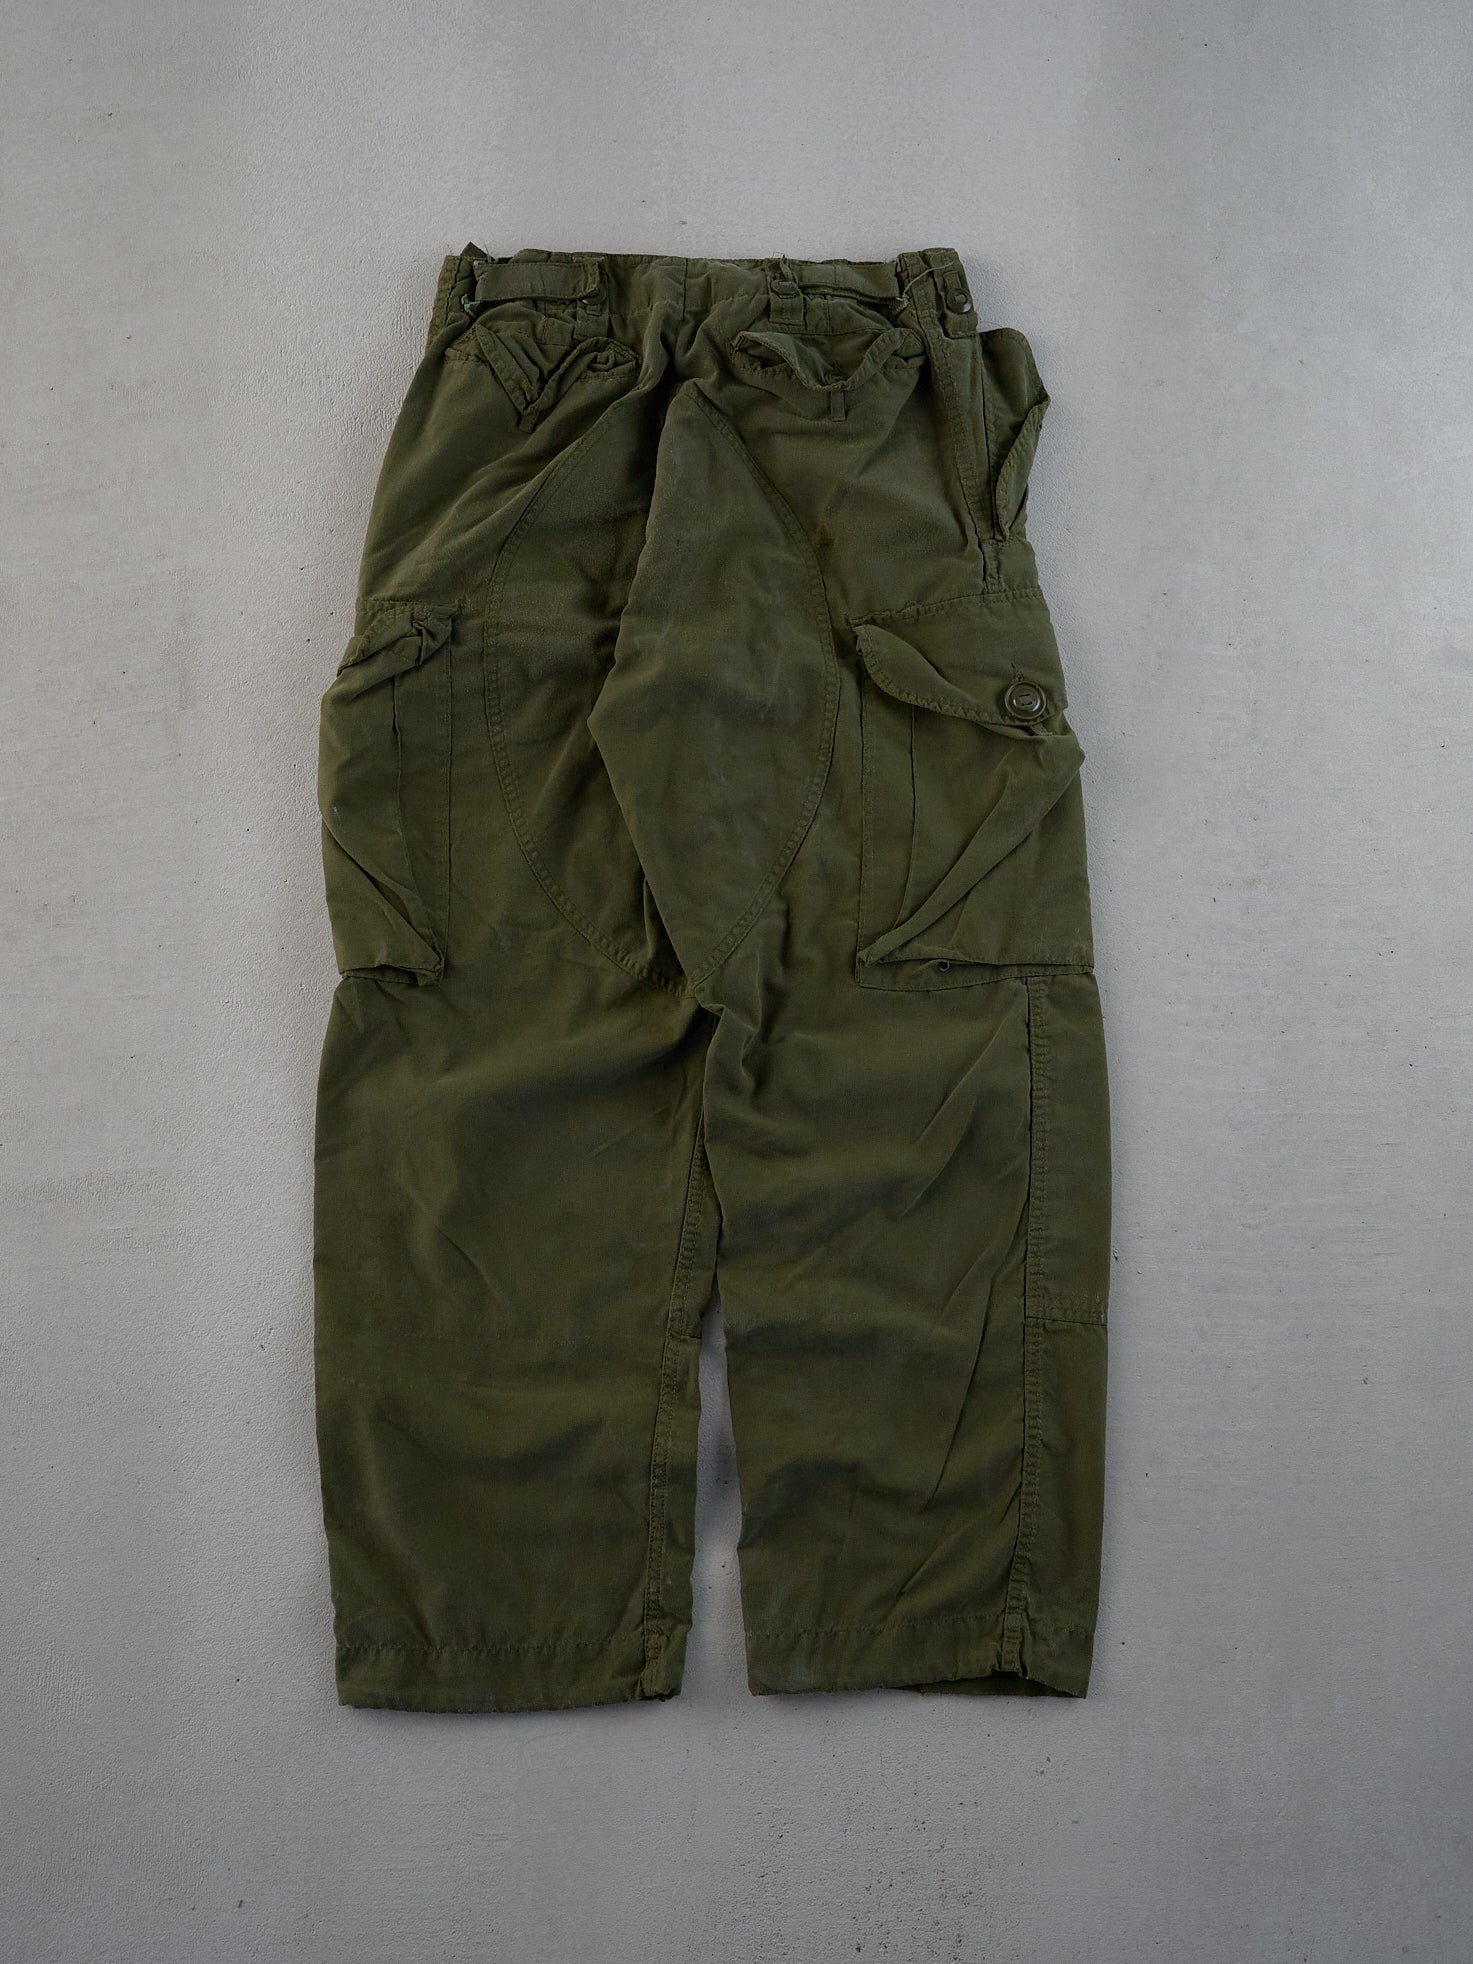 Vintage 90s Green Army Parachute Cargo Pants (28x28)